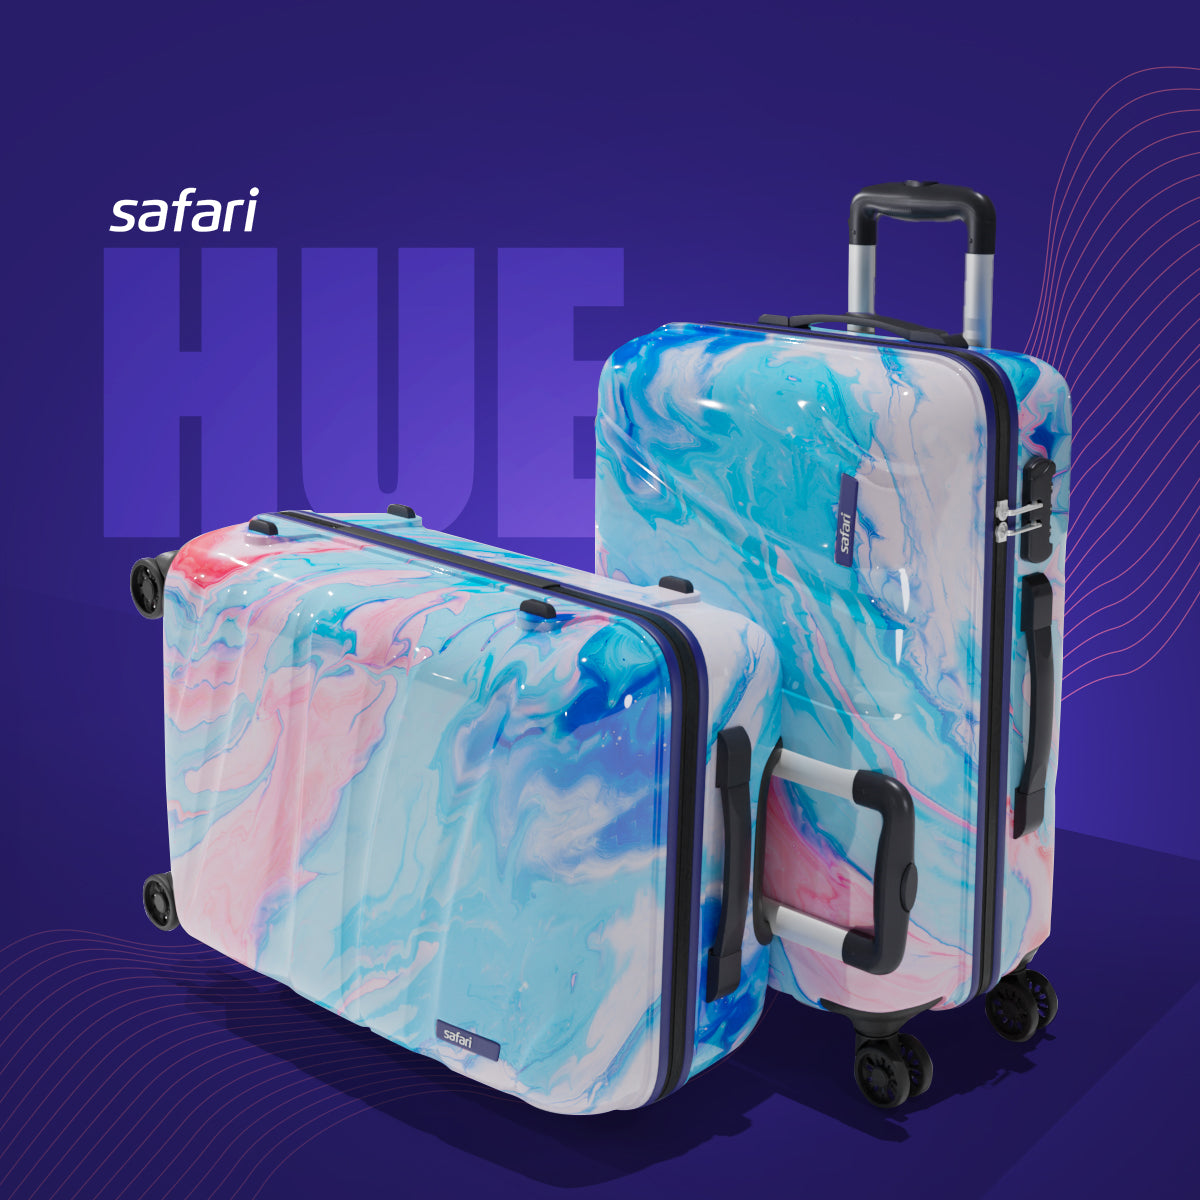 Safari Hue Set of 3 Printed Trolley Bags with Dual Wheels